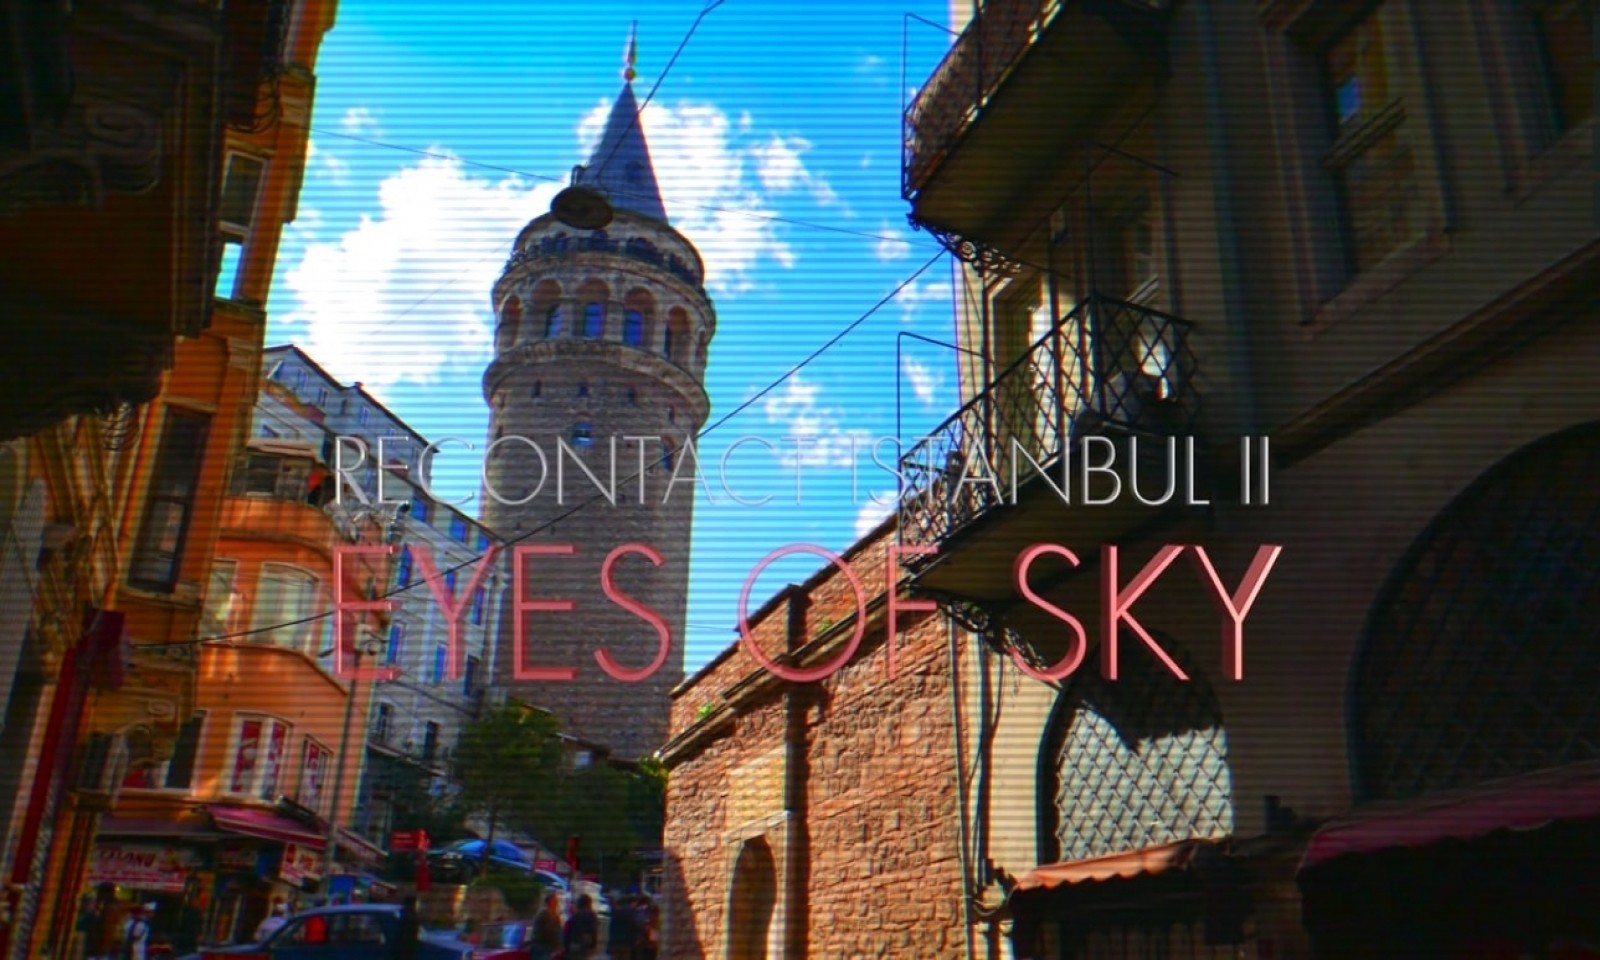 u201cRecontact Istanbul: Eyes of Skyu201d